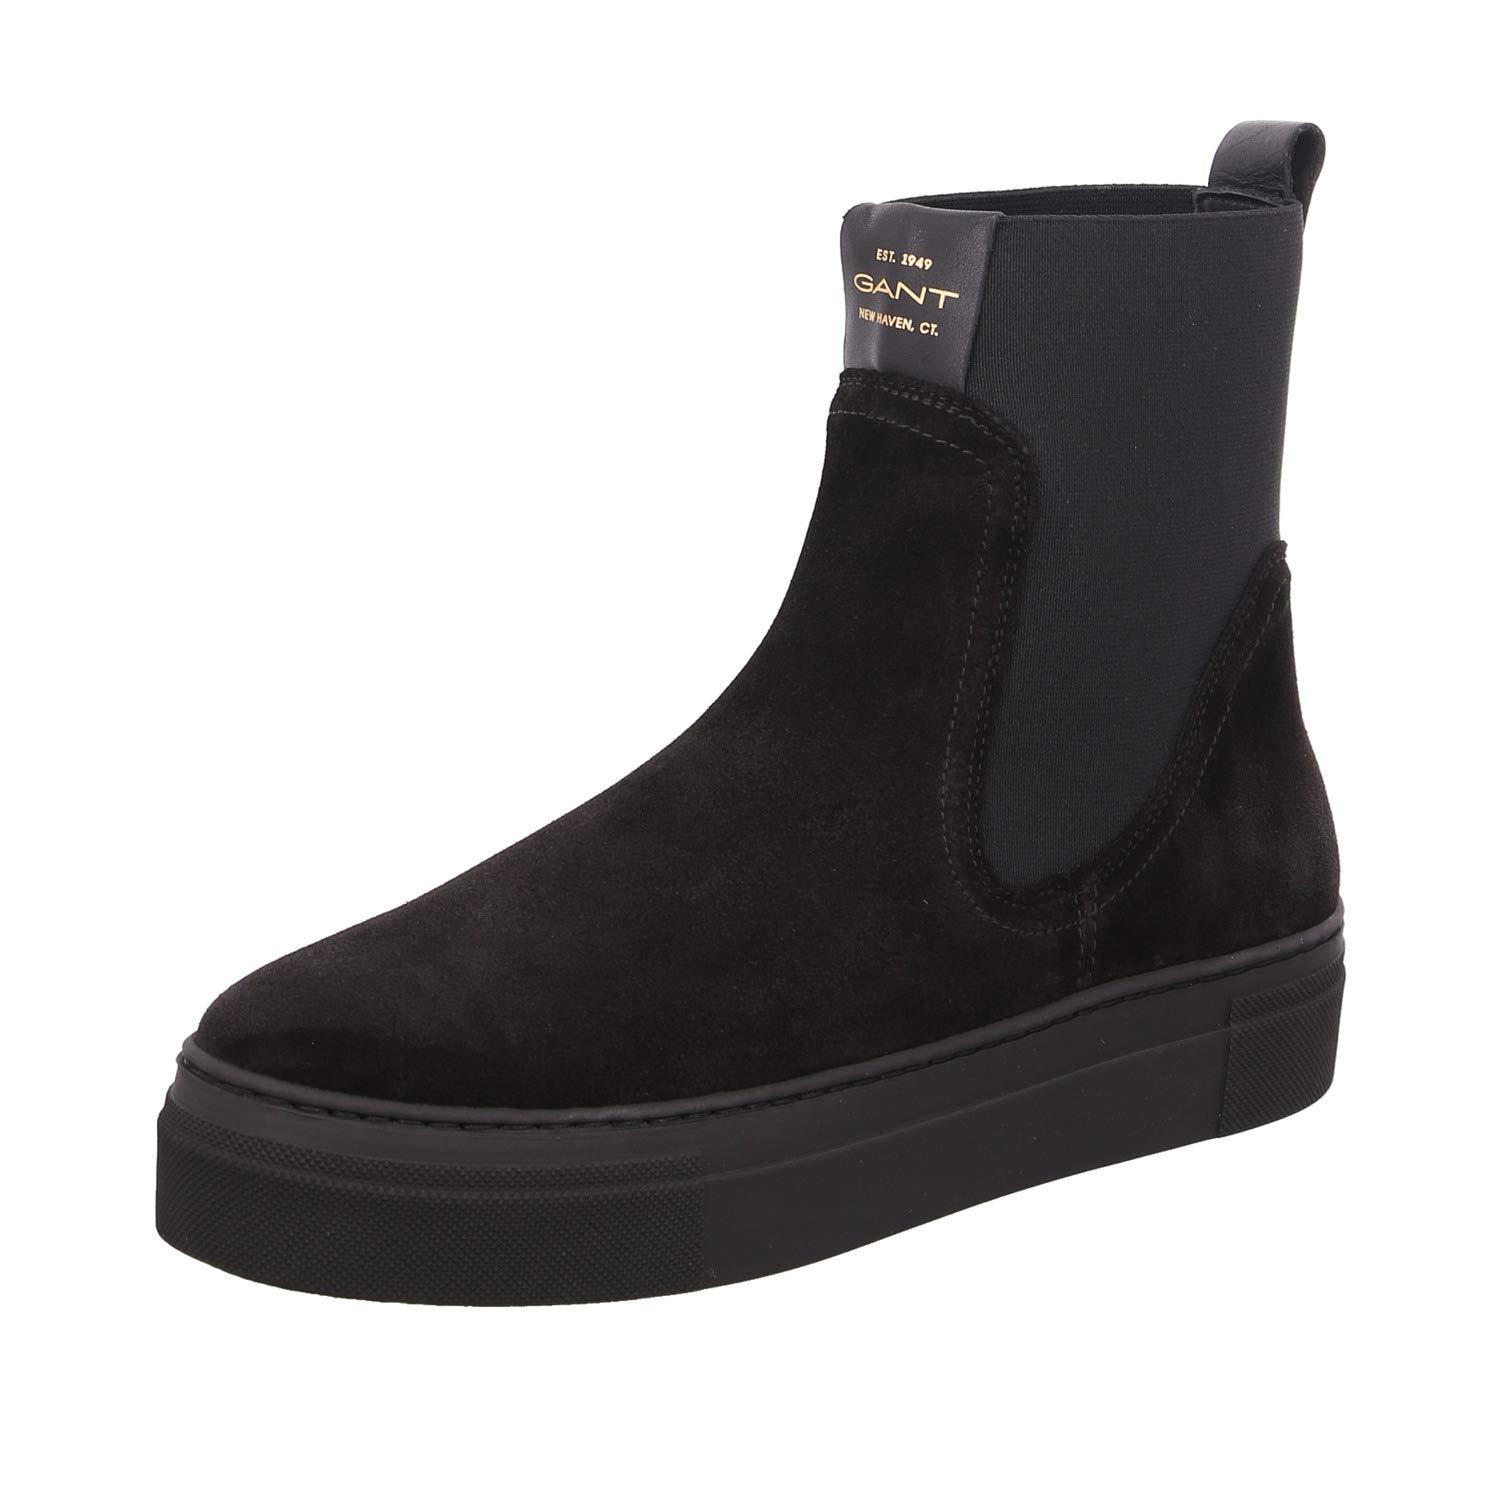 Buy gant vanna boots cheap online